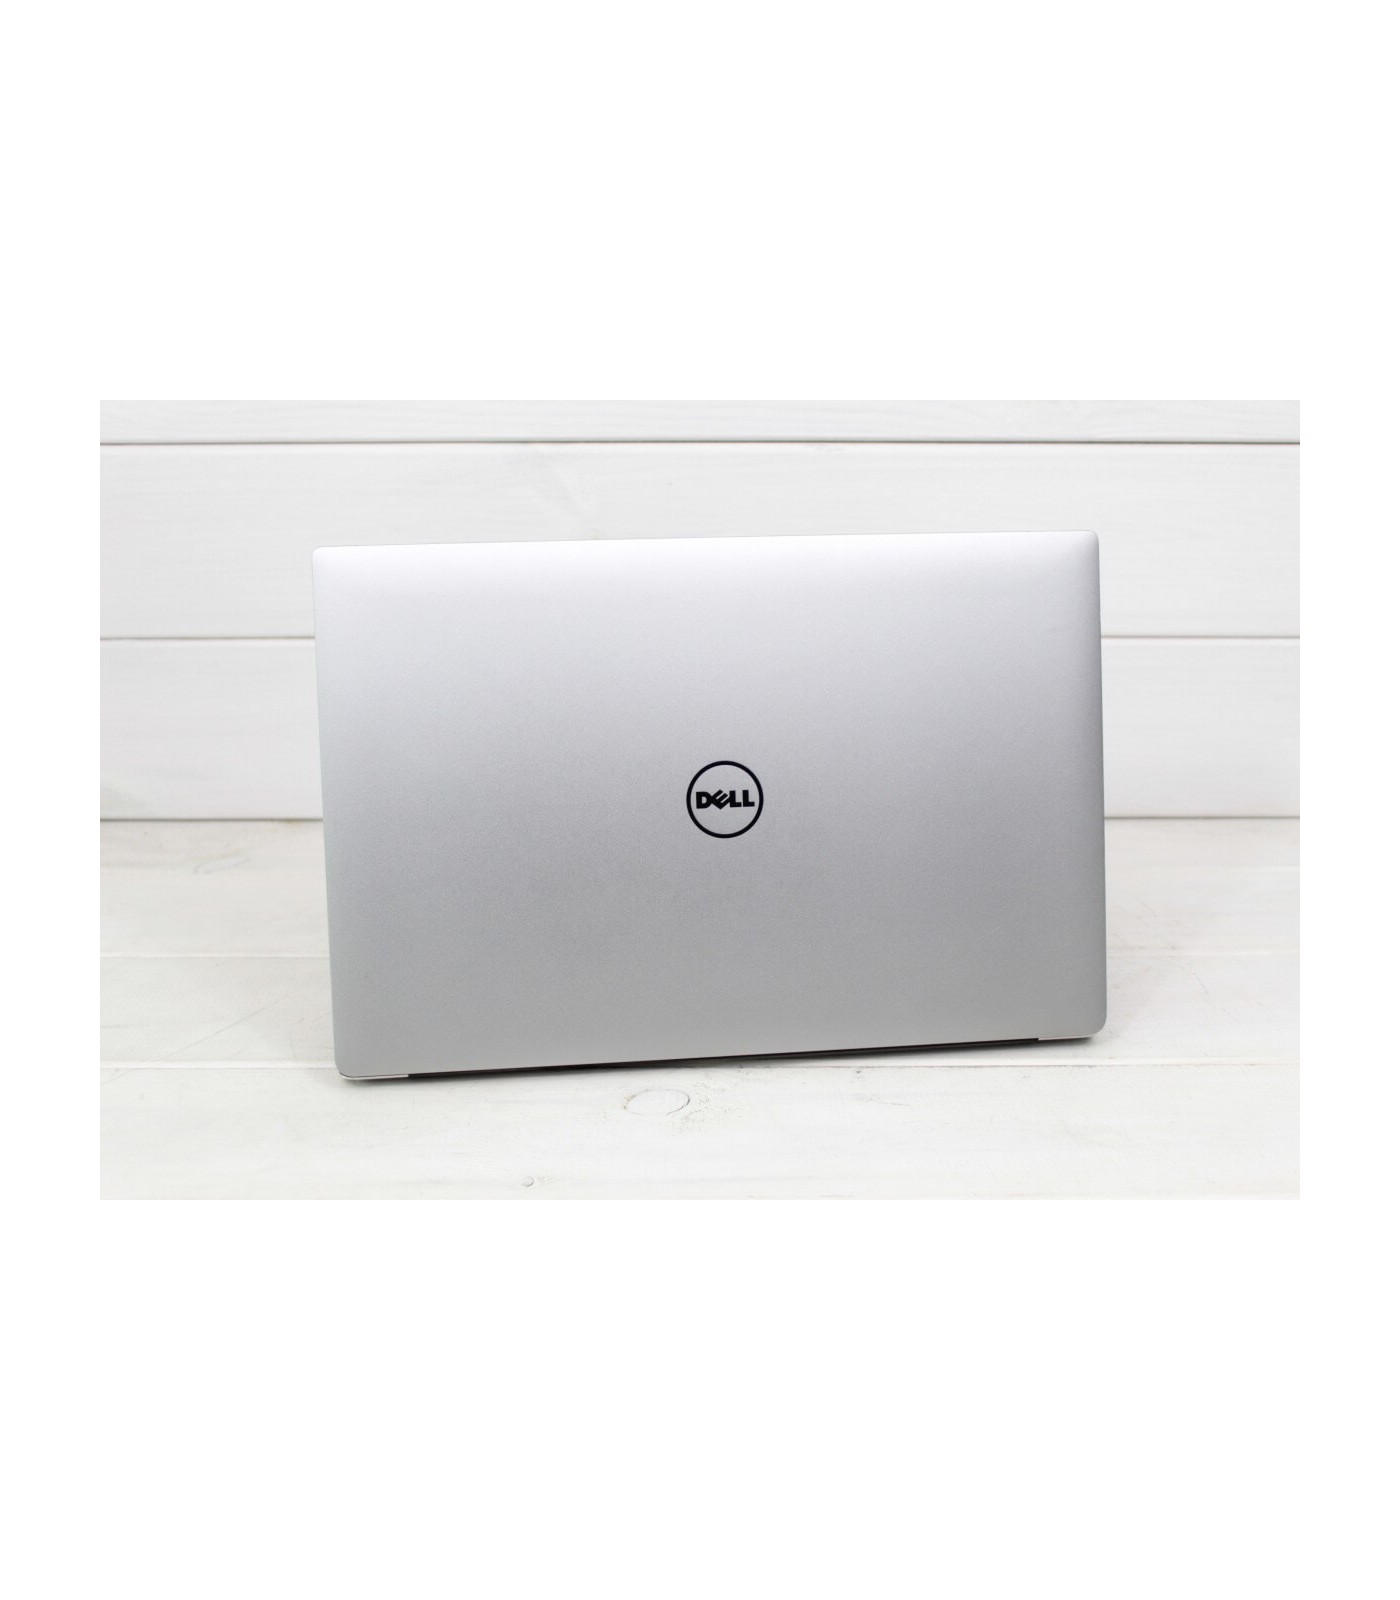 Poleasingowy laptop Dell Precision 5510 z Intel Xeon E3-1505M V5, 1920x1080 IPS, Klasa A+